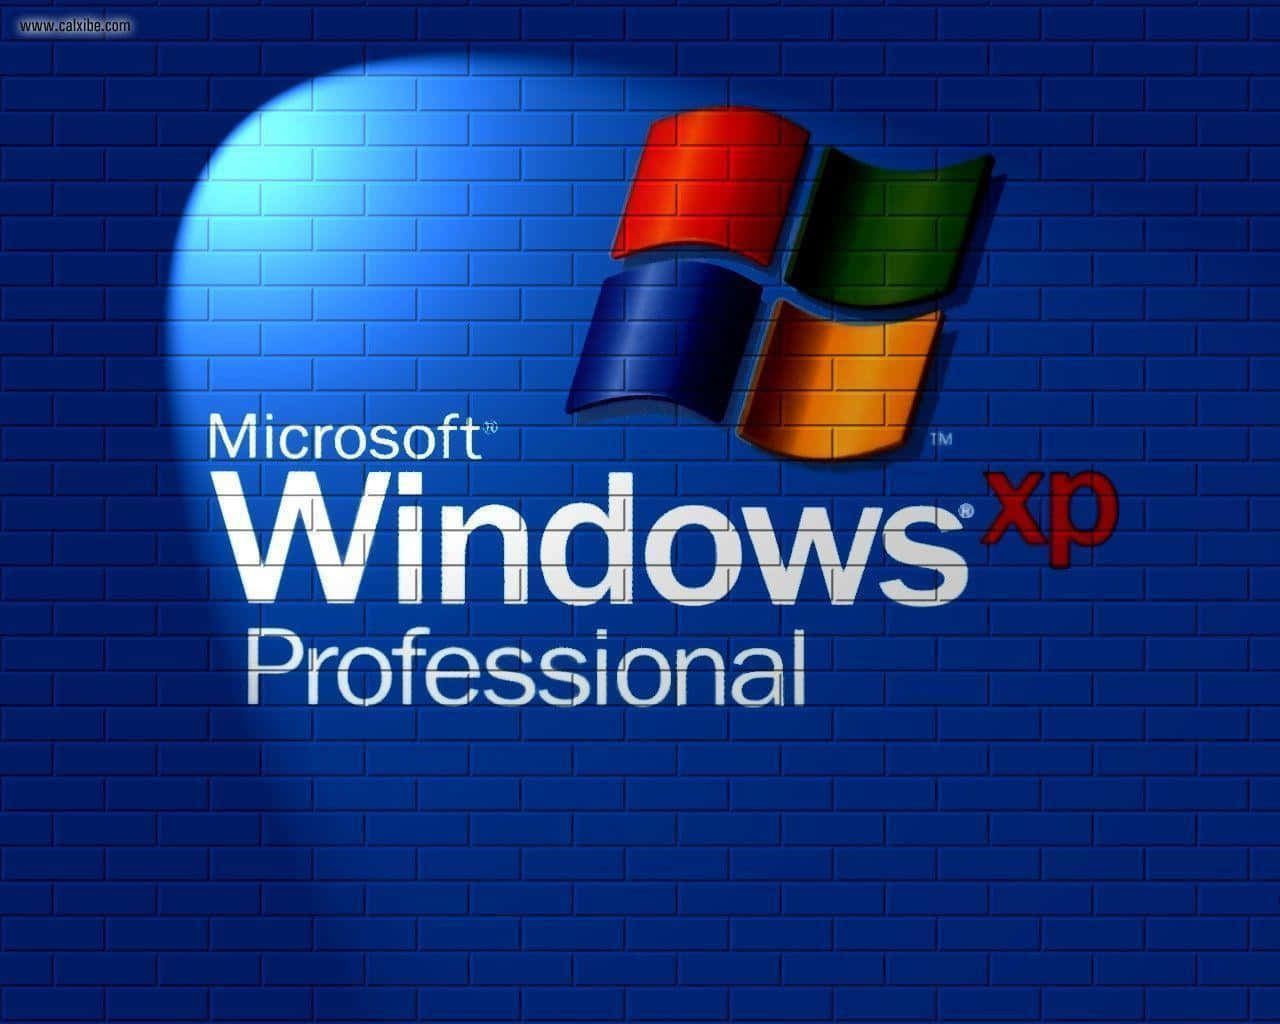 Detforfriskende Windows Xp-logo. Wallpaper